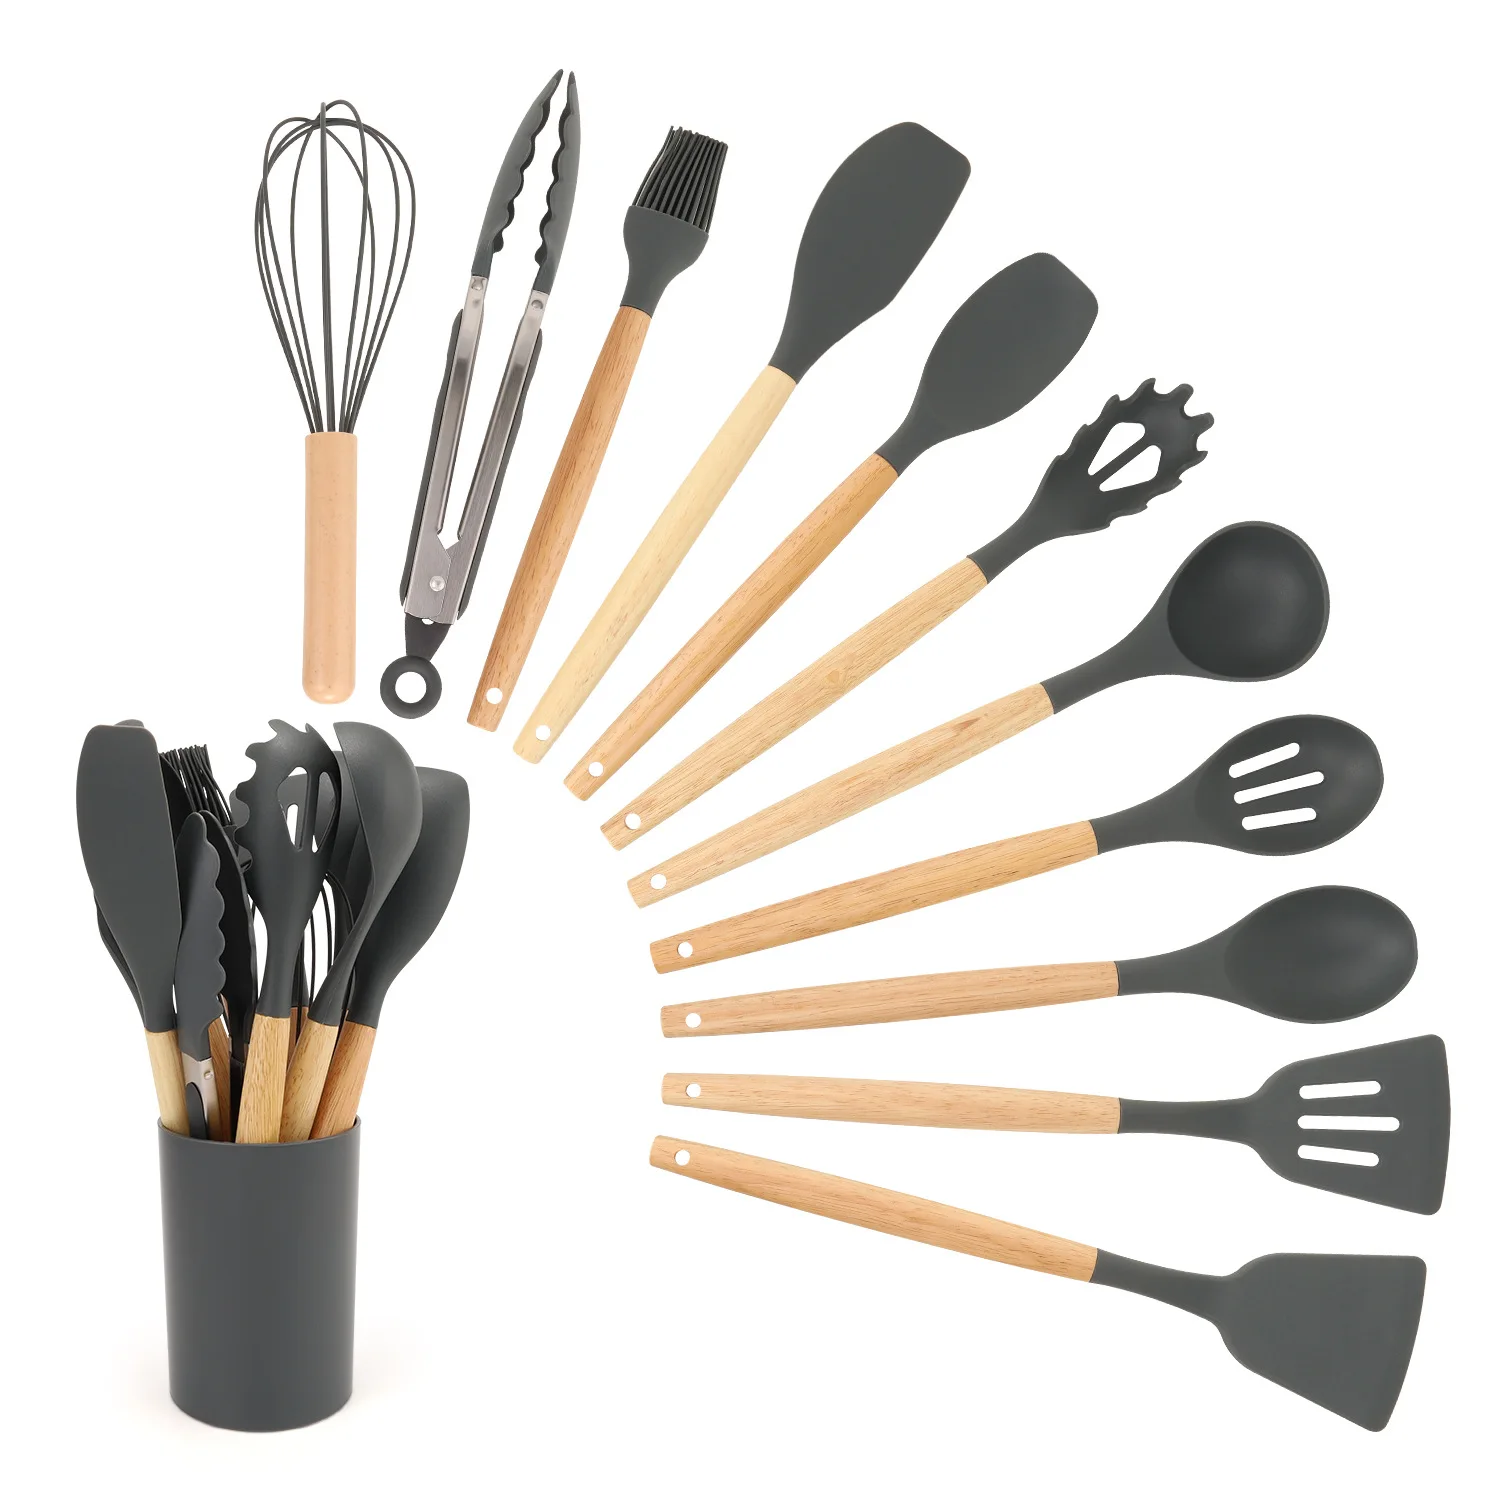 Complete Kitchen Utensil Set 12 Piece Non-Stick Cooking Silicone Kitchenware Kit kitchen utensils Wooden Handle